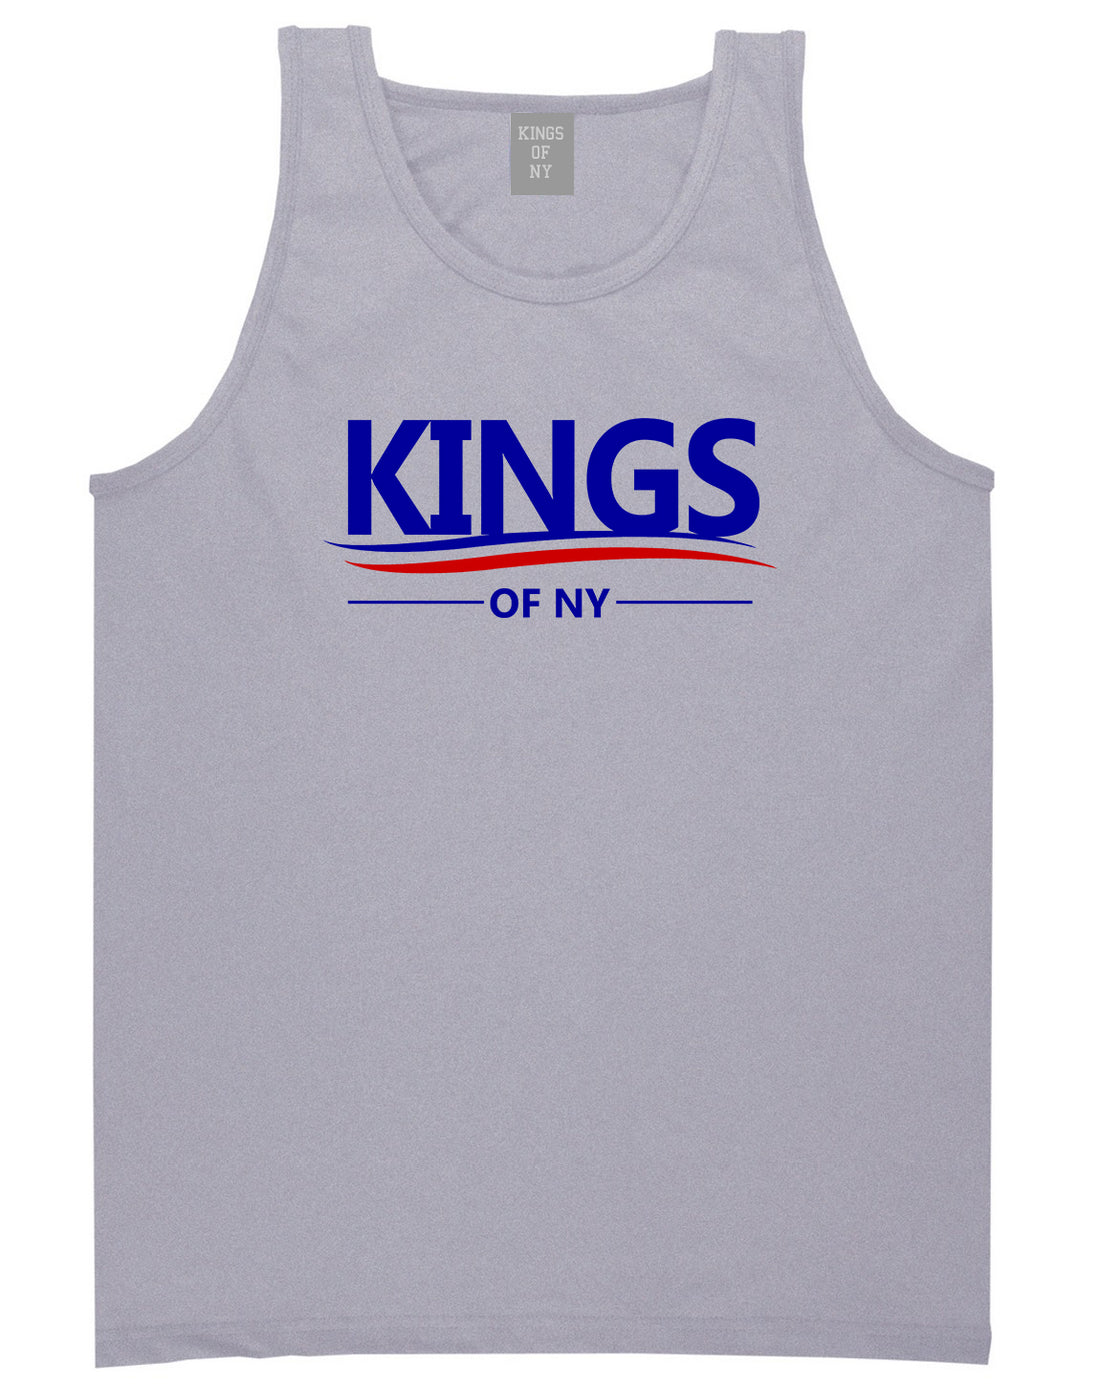 Kings Of NY Campaign Logo Tank Top Shirt in Grey